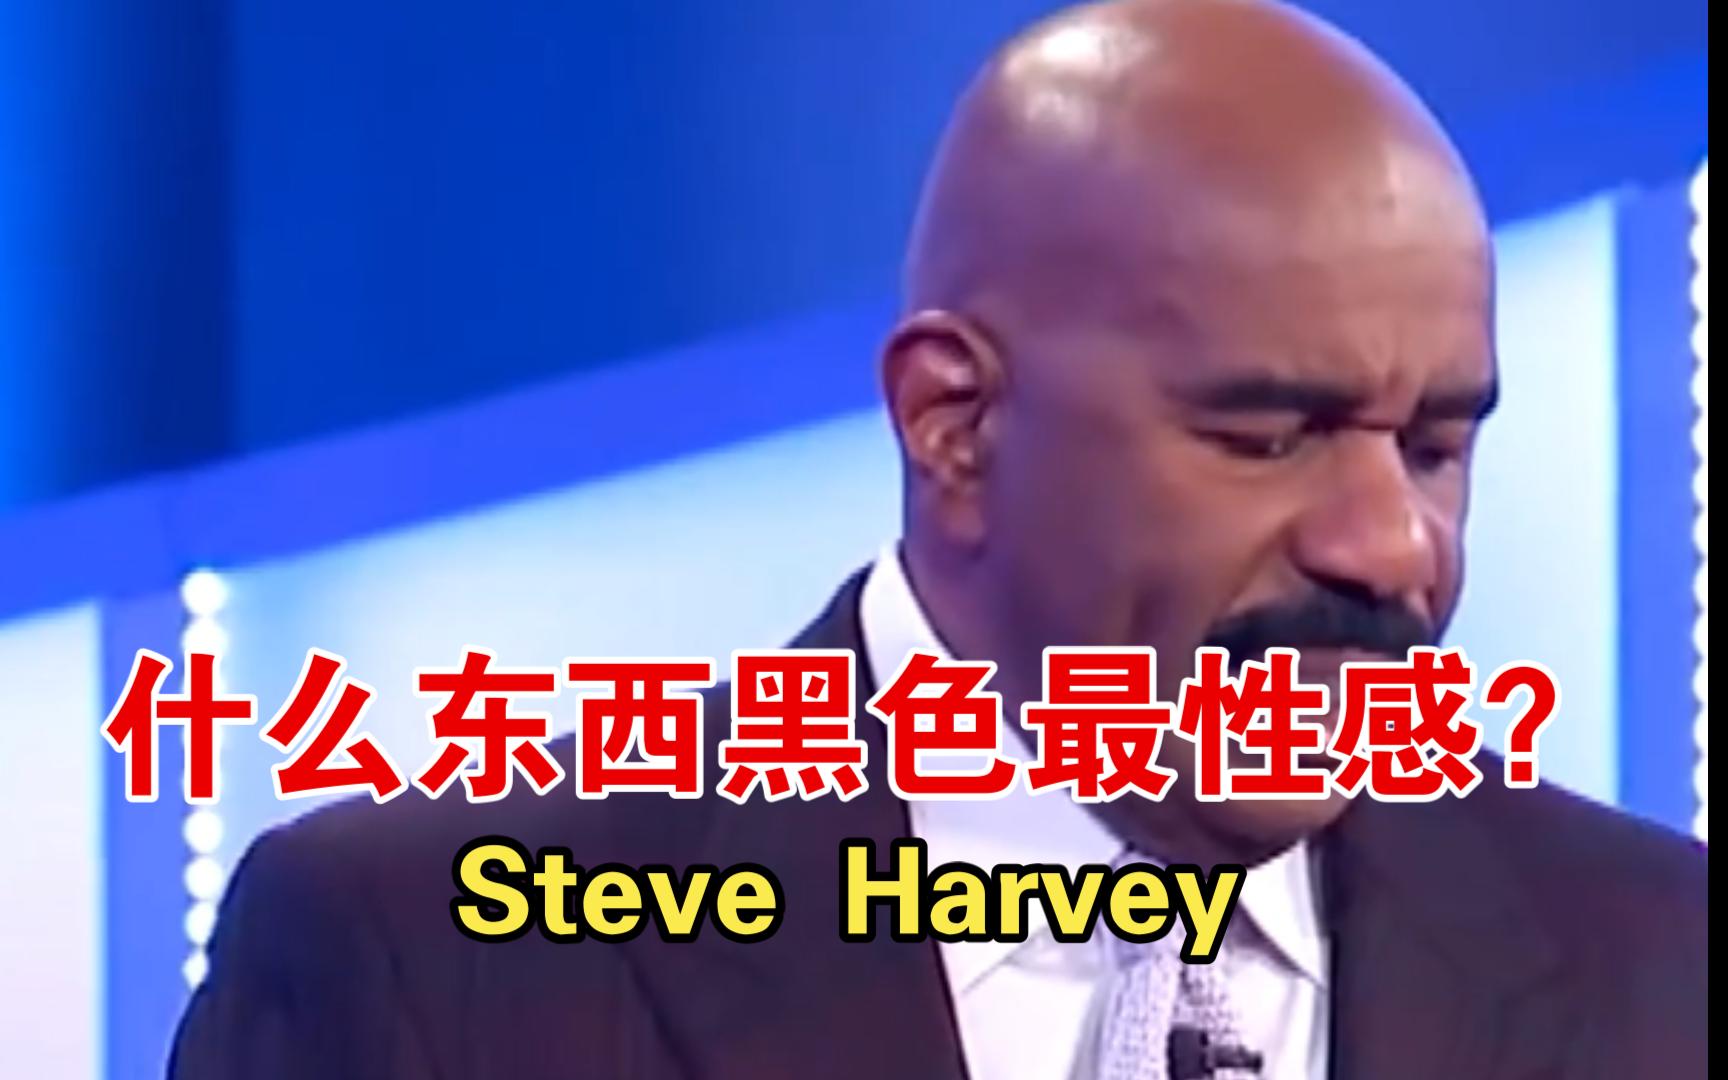 Steve Harvey -什么东西黑色最性感？